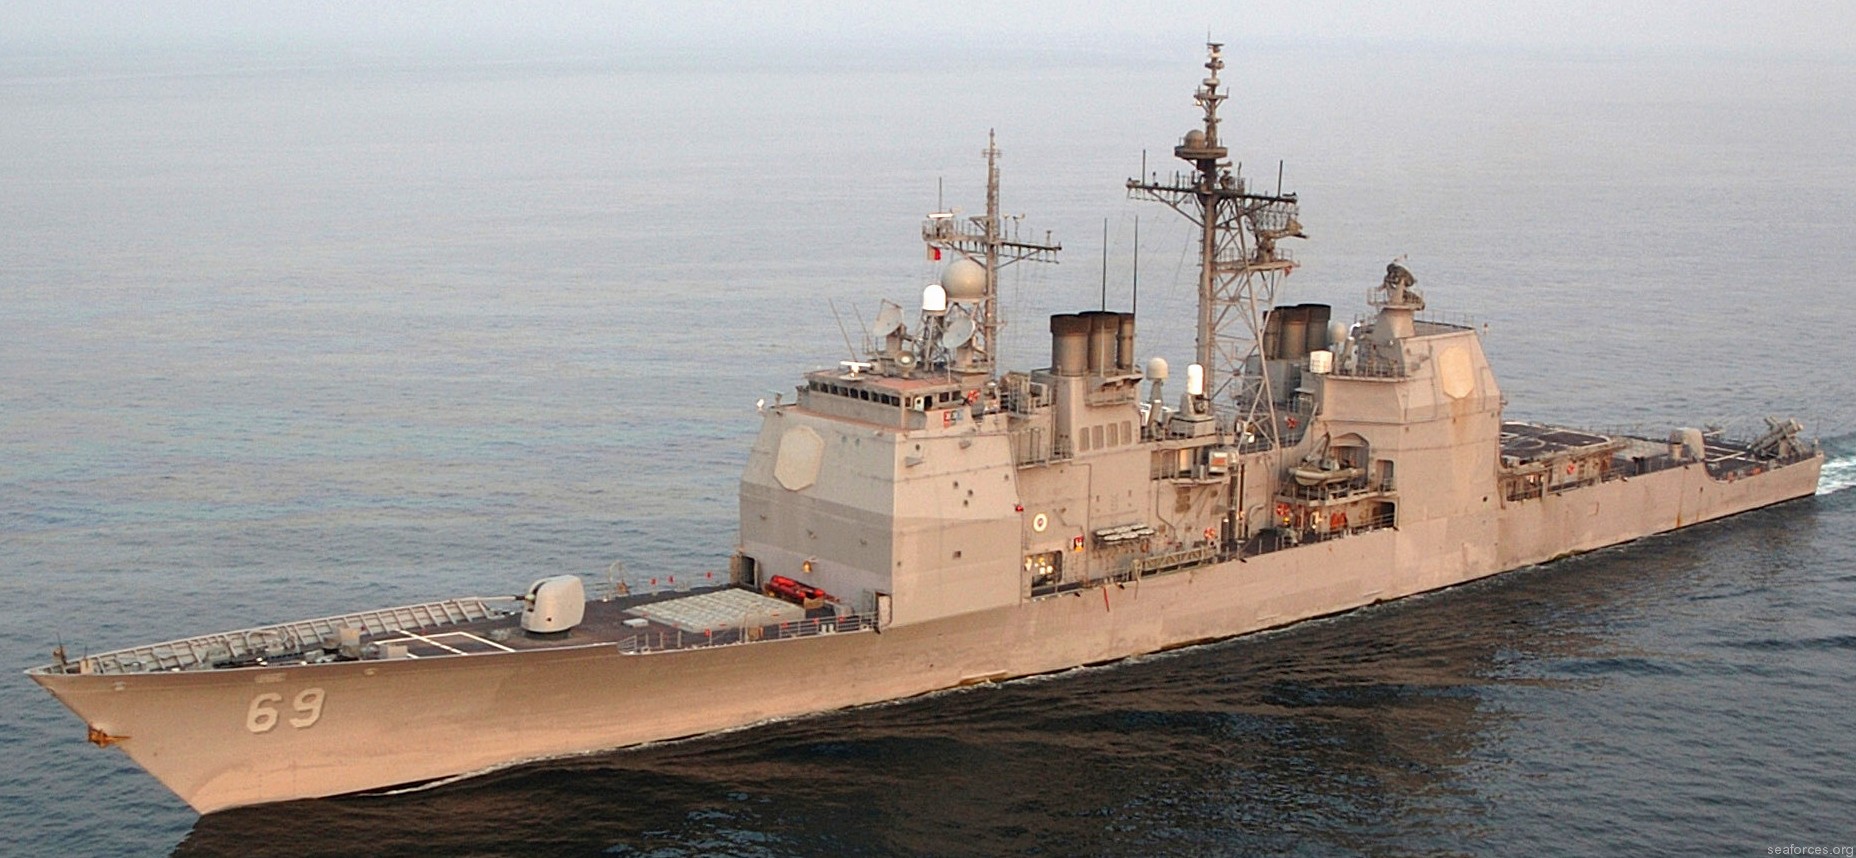 cg-69 uss vicksburg ticonderoga class guided missile cruiser us navy 38